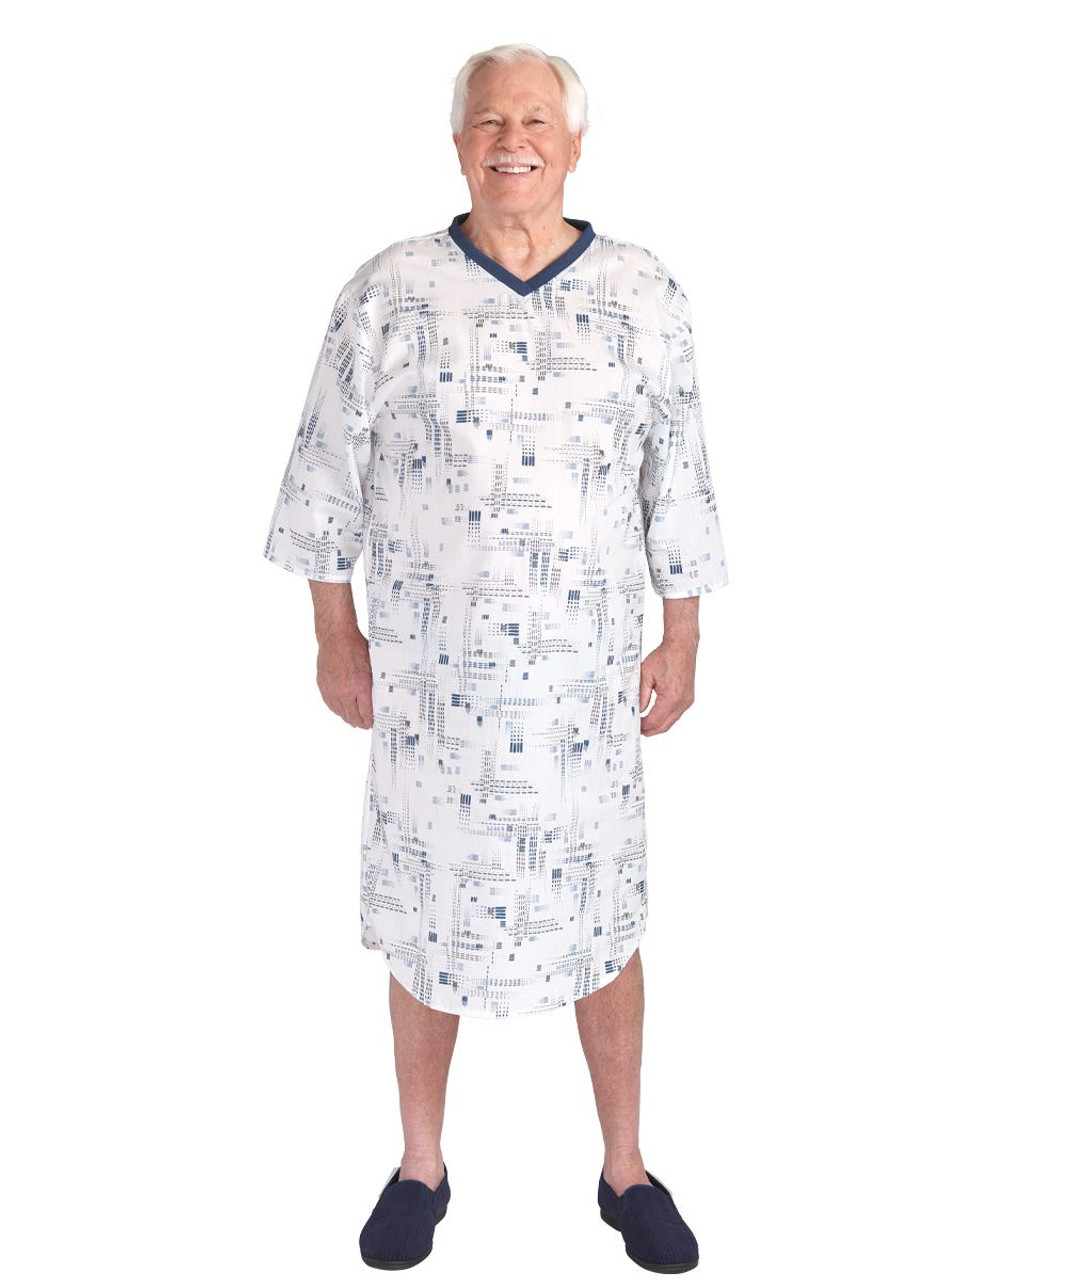 Silverts SV50050 Poly-Cotton Hospital Gowns for Men Navy/White, Size=L, SV50050-S50333-L